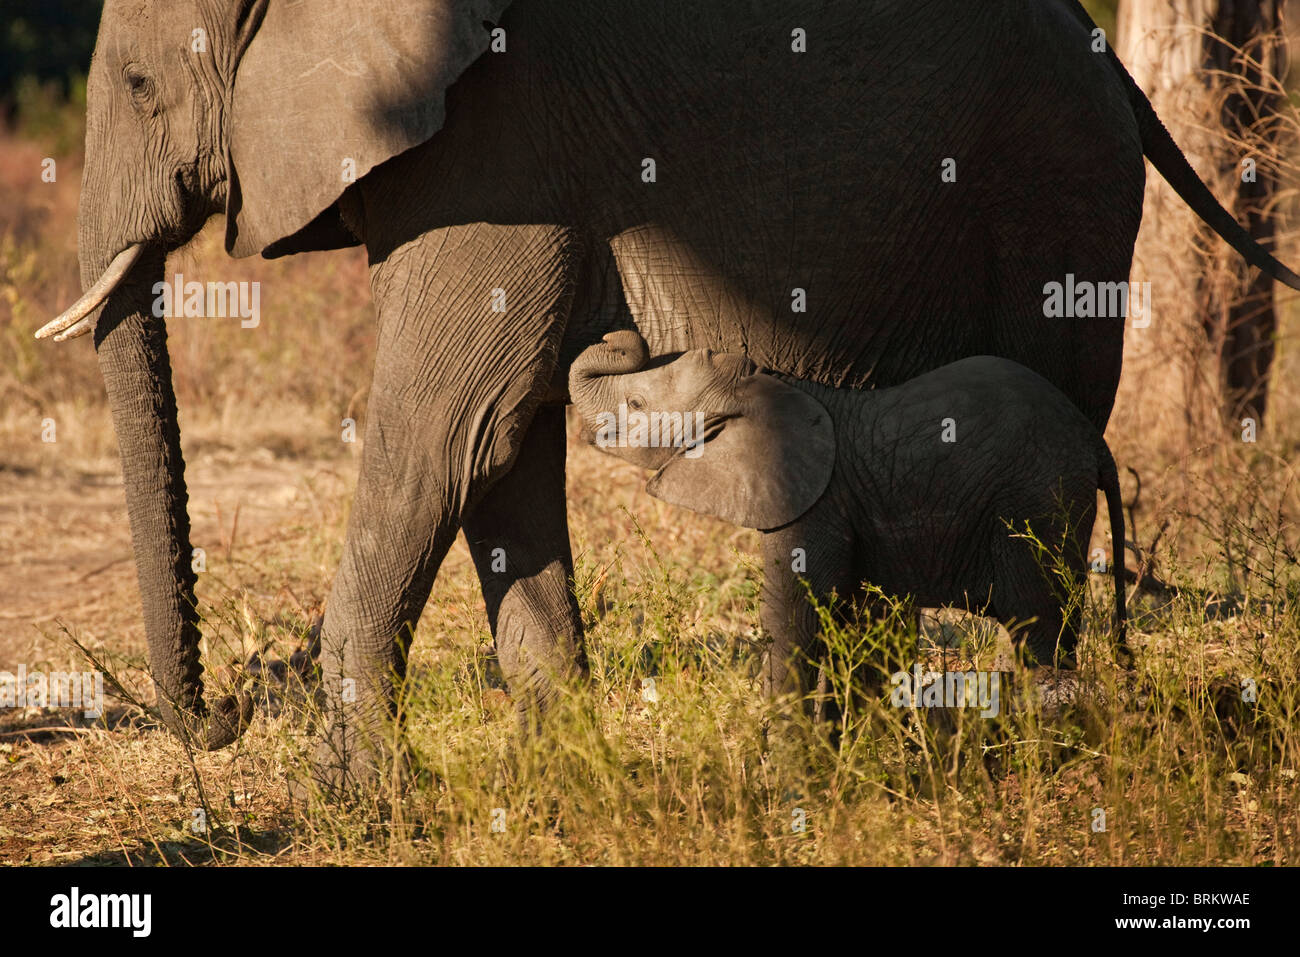 Elefant Kuh und jungen Kalb stehend Side-by-side Stockfoto